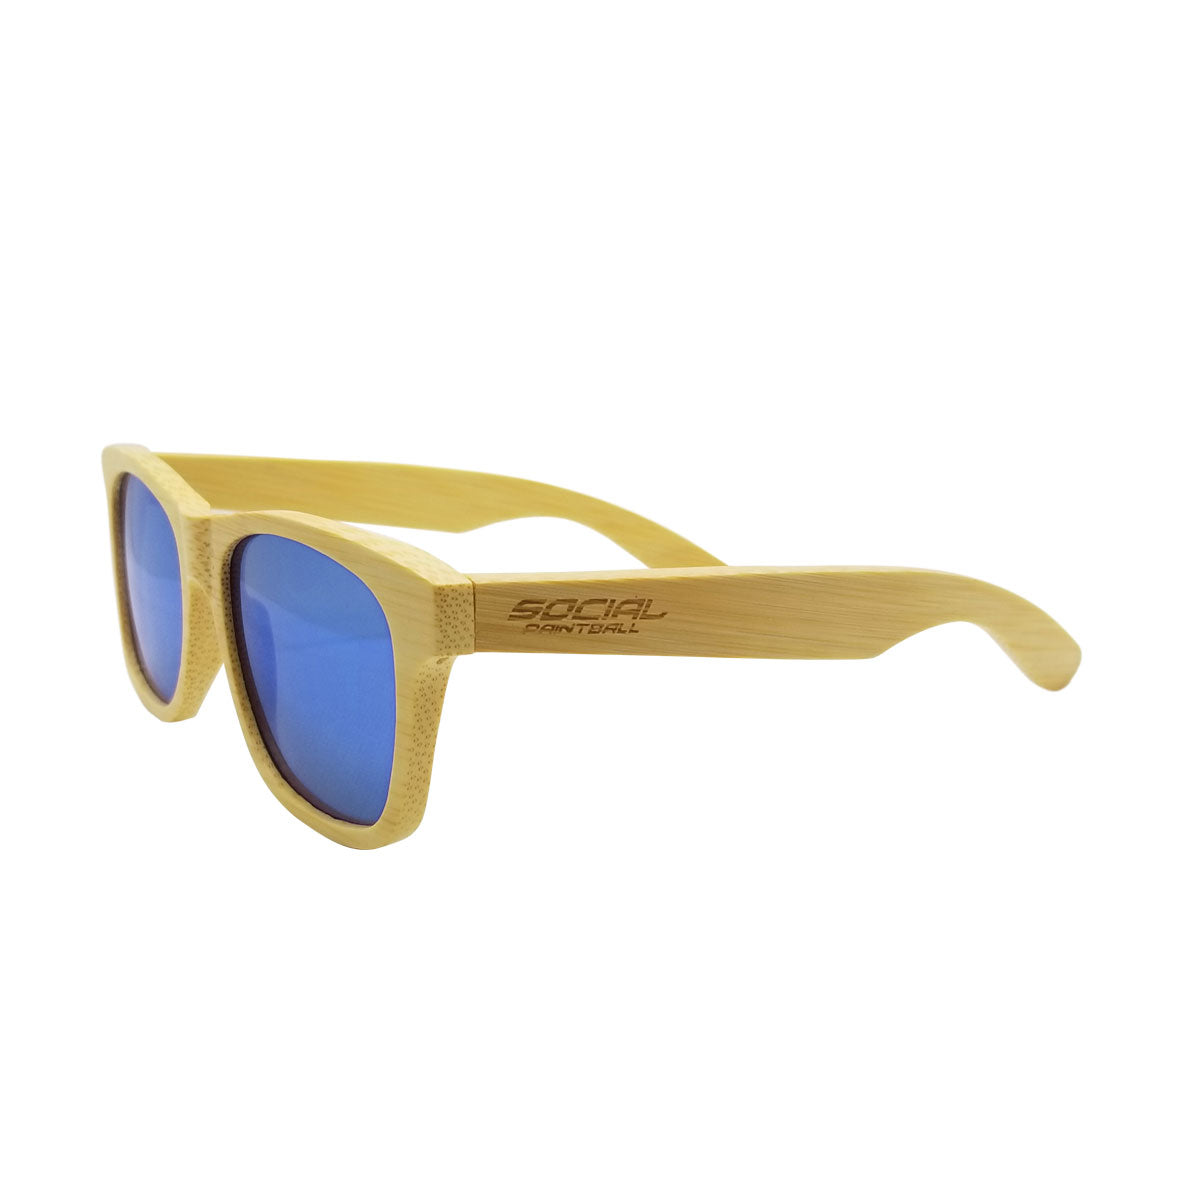 Bamboo Wood Sunglasses, Blue Mirror Lens